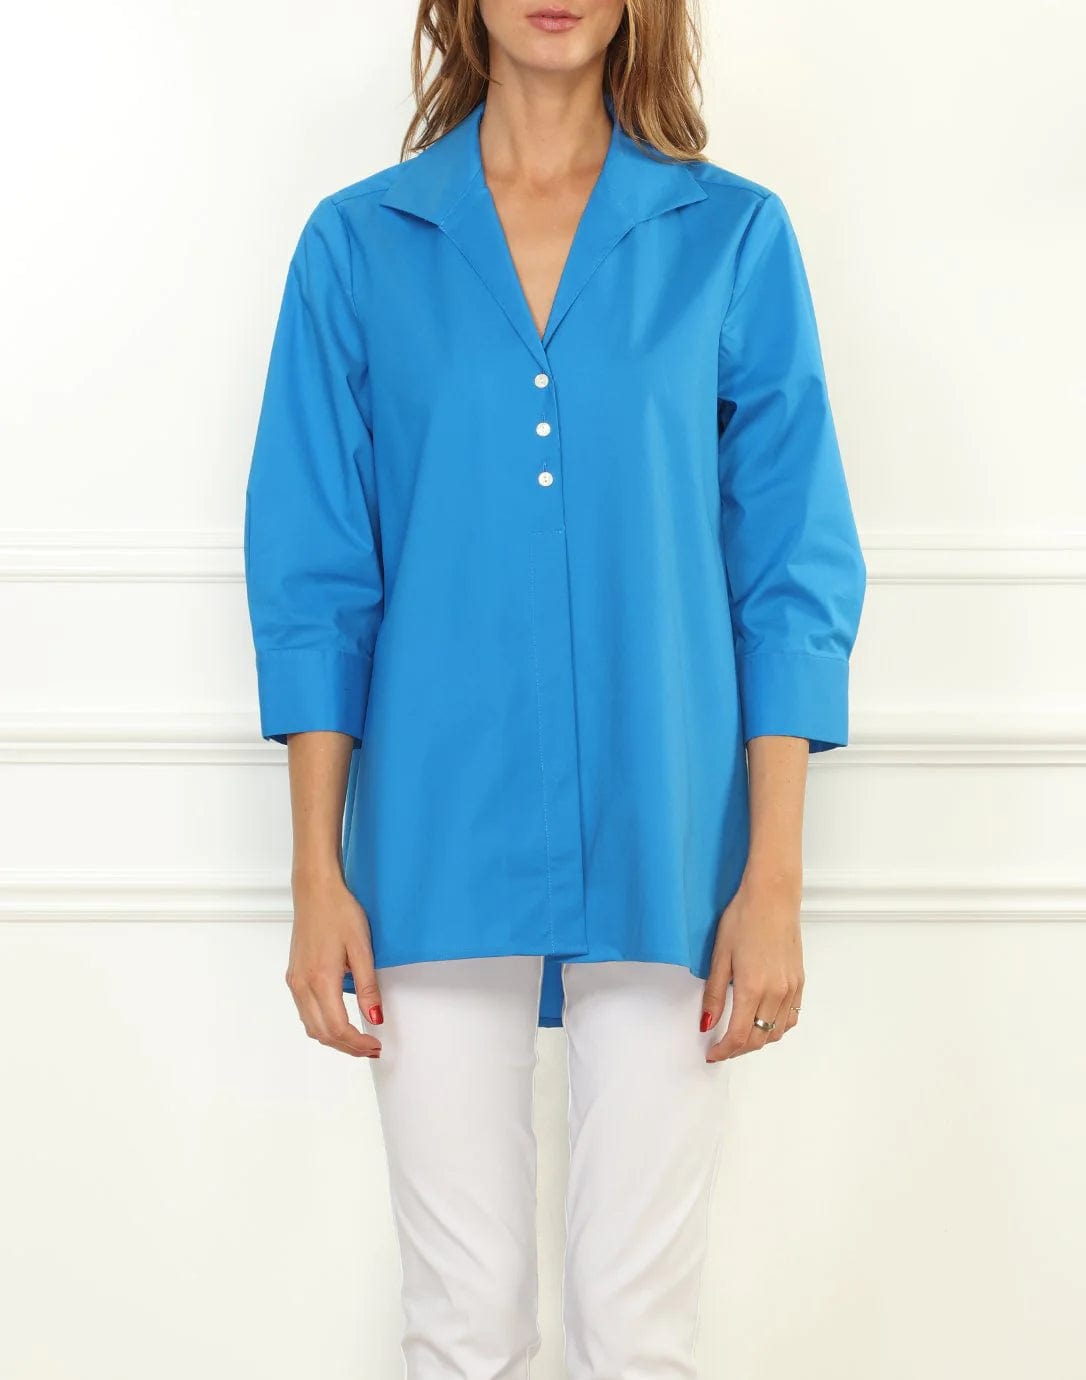 Hinson Wu Women's Shirts & Tops Cerulean / 4 Betty Wing Collar 3/4 Sleeve Tunic